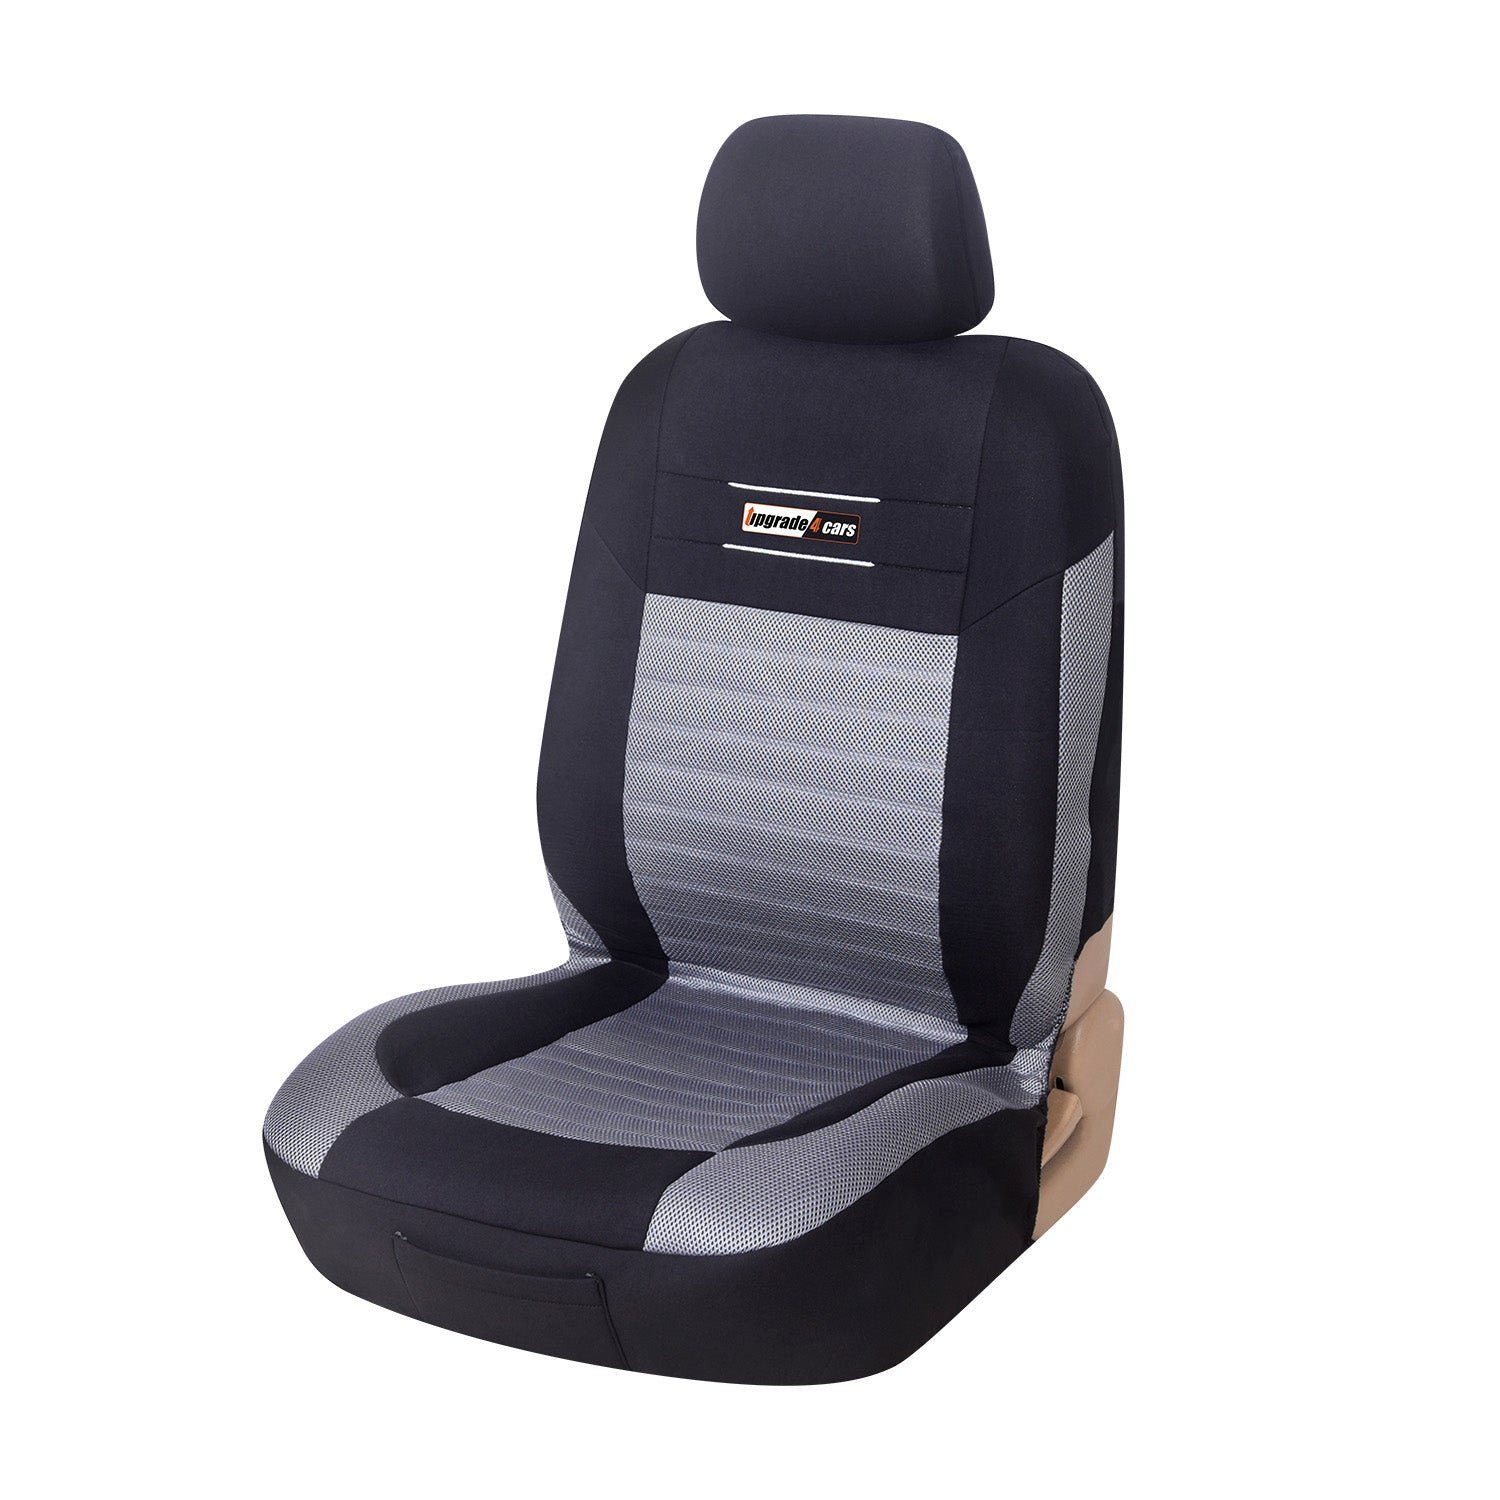 Universal, Fahrersitz Vordersitz, Upgrade4cars Auto-Sitzschoner Grau Auto-Zubehör Beifahrersitz oder 2-teilig, Autositzbezug